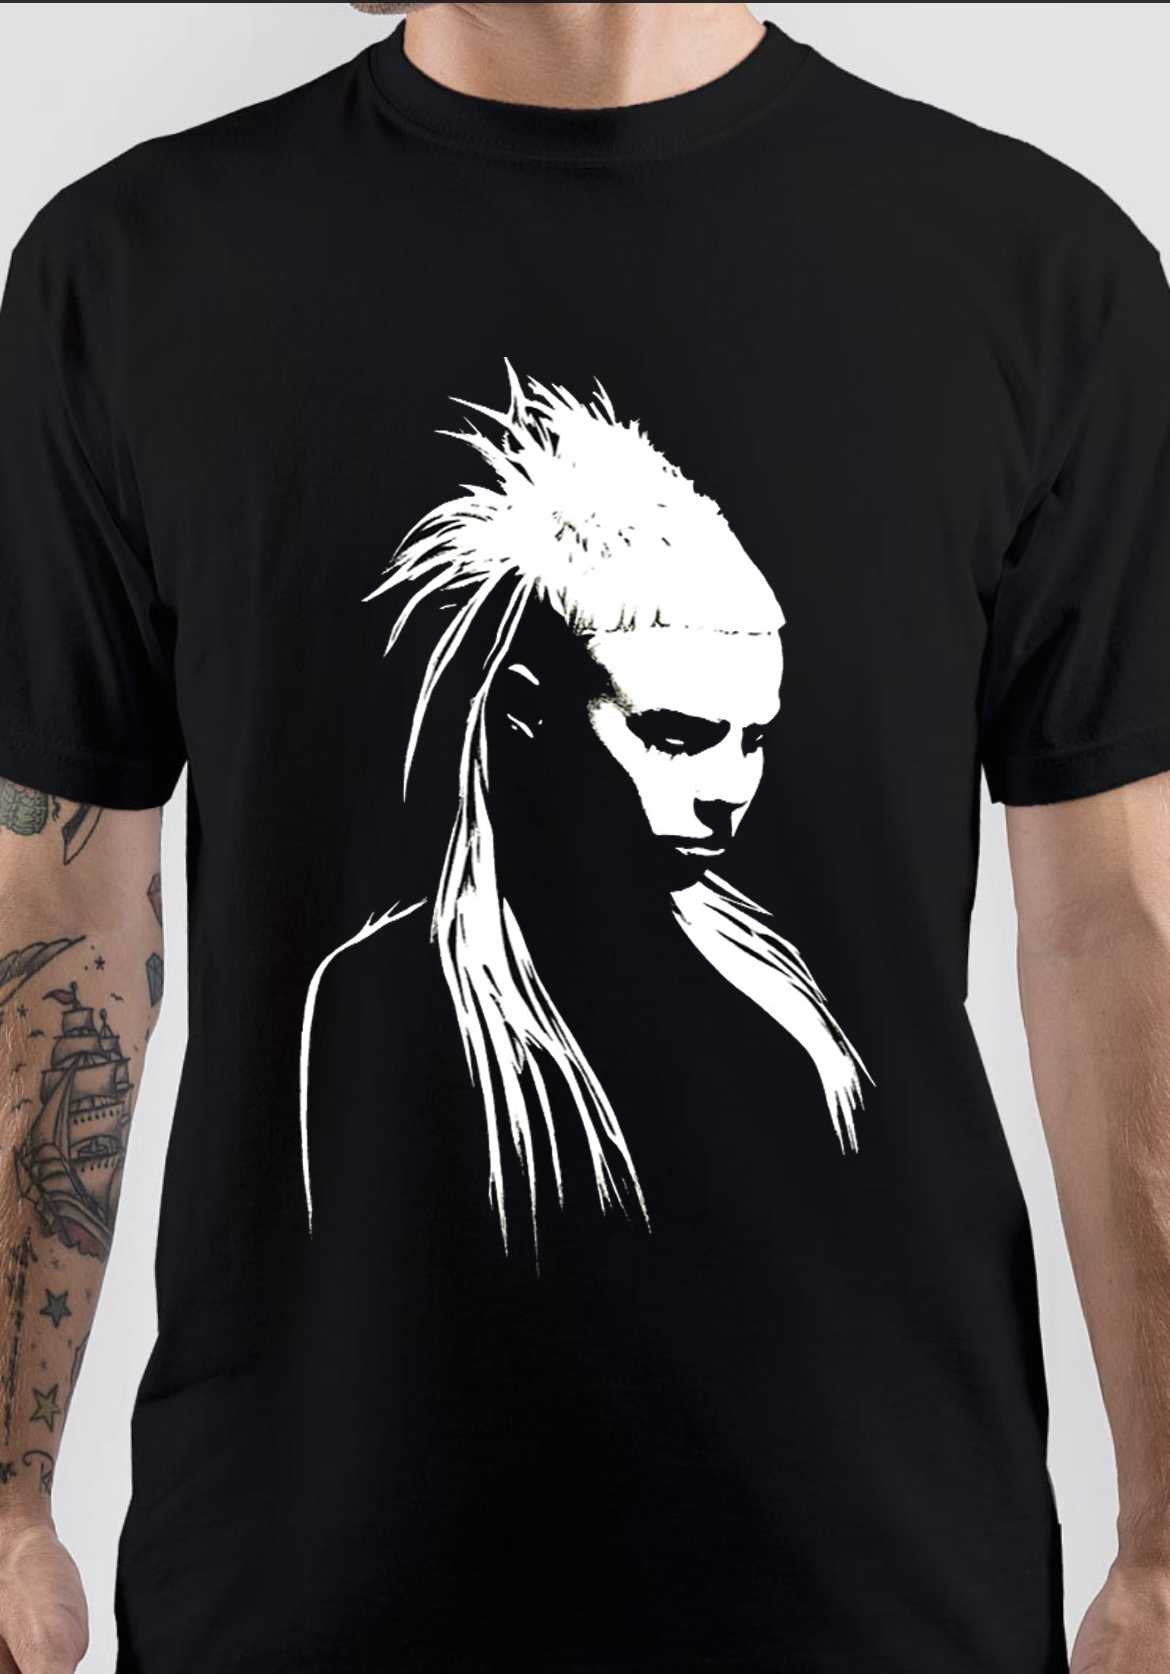 Die Antwoord T-Shirt And Merchandise